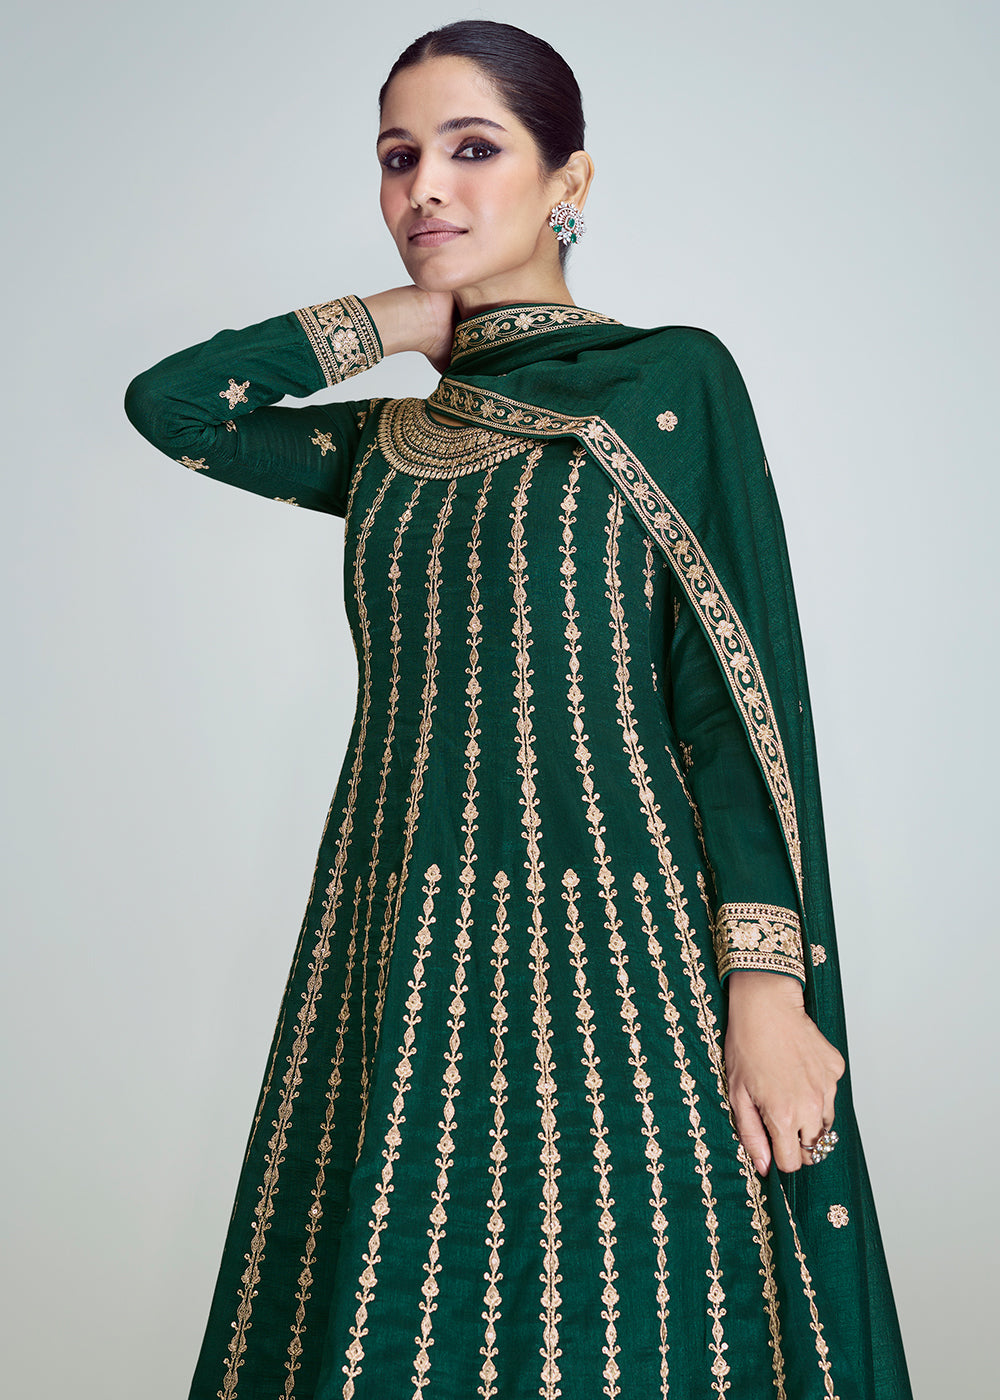 Buy Now Dark Green Silk Embroidered Peplum Punjabi Style Suit Online in USA, UK, Canada, Germany, Australia & Worldwide at Empress Clothing.